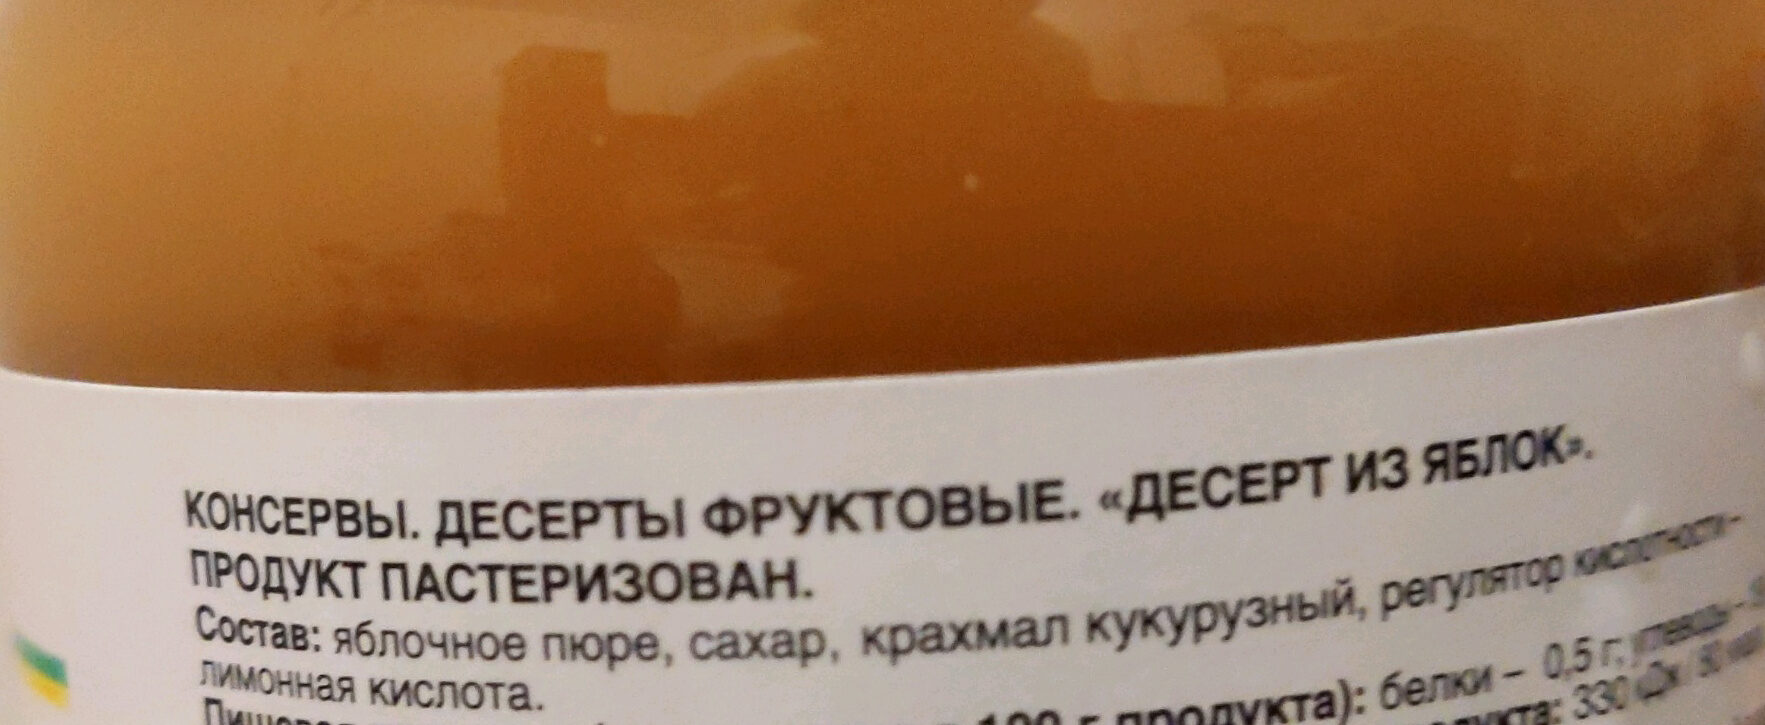 Десерт яблочный - Ingredienser - ru